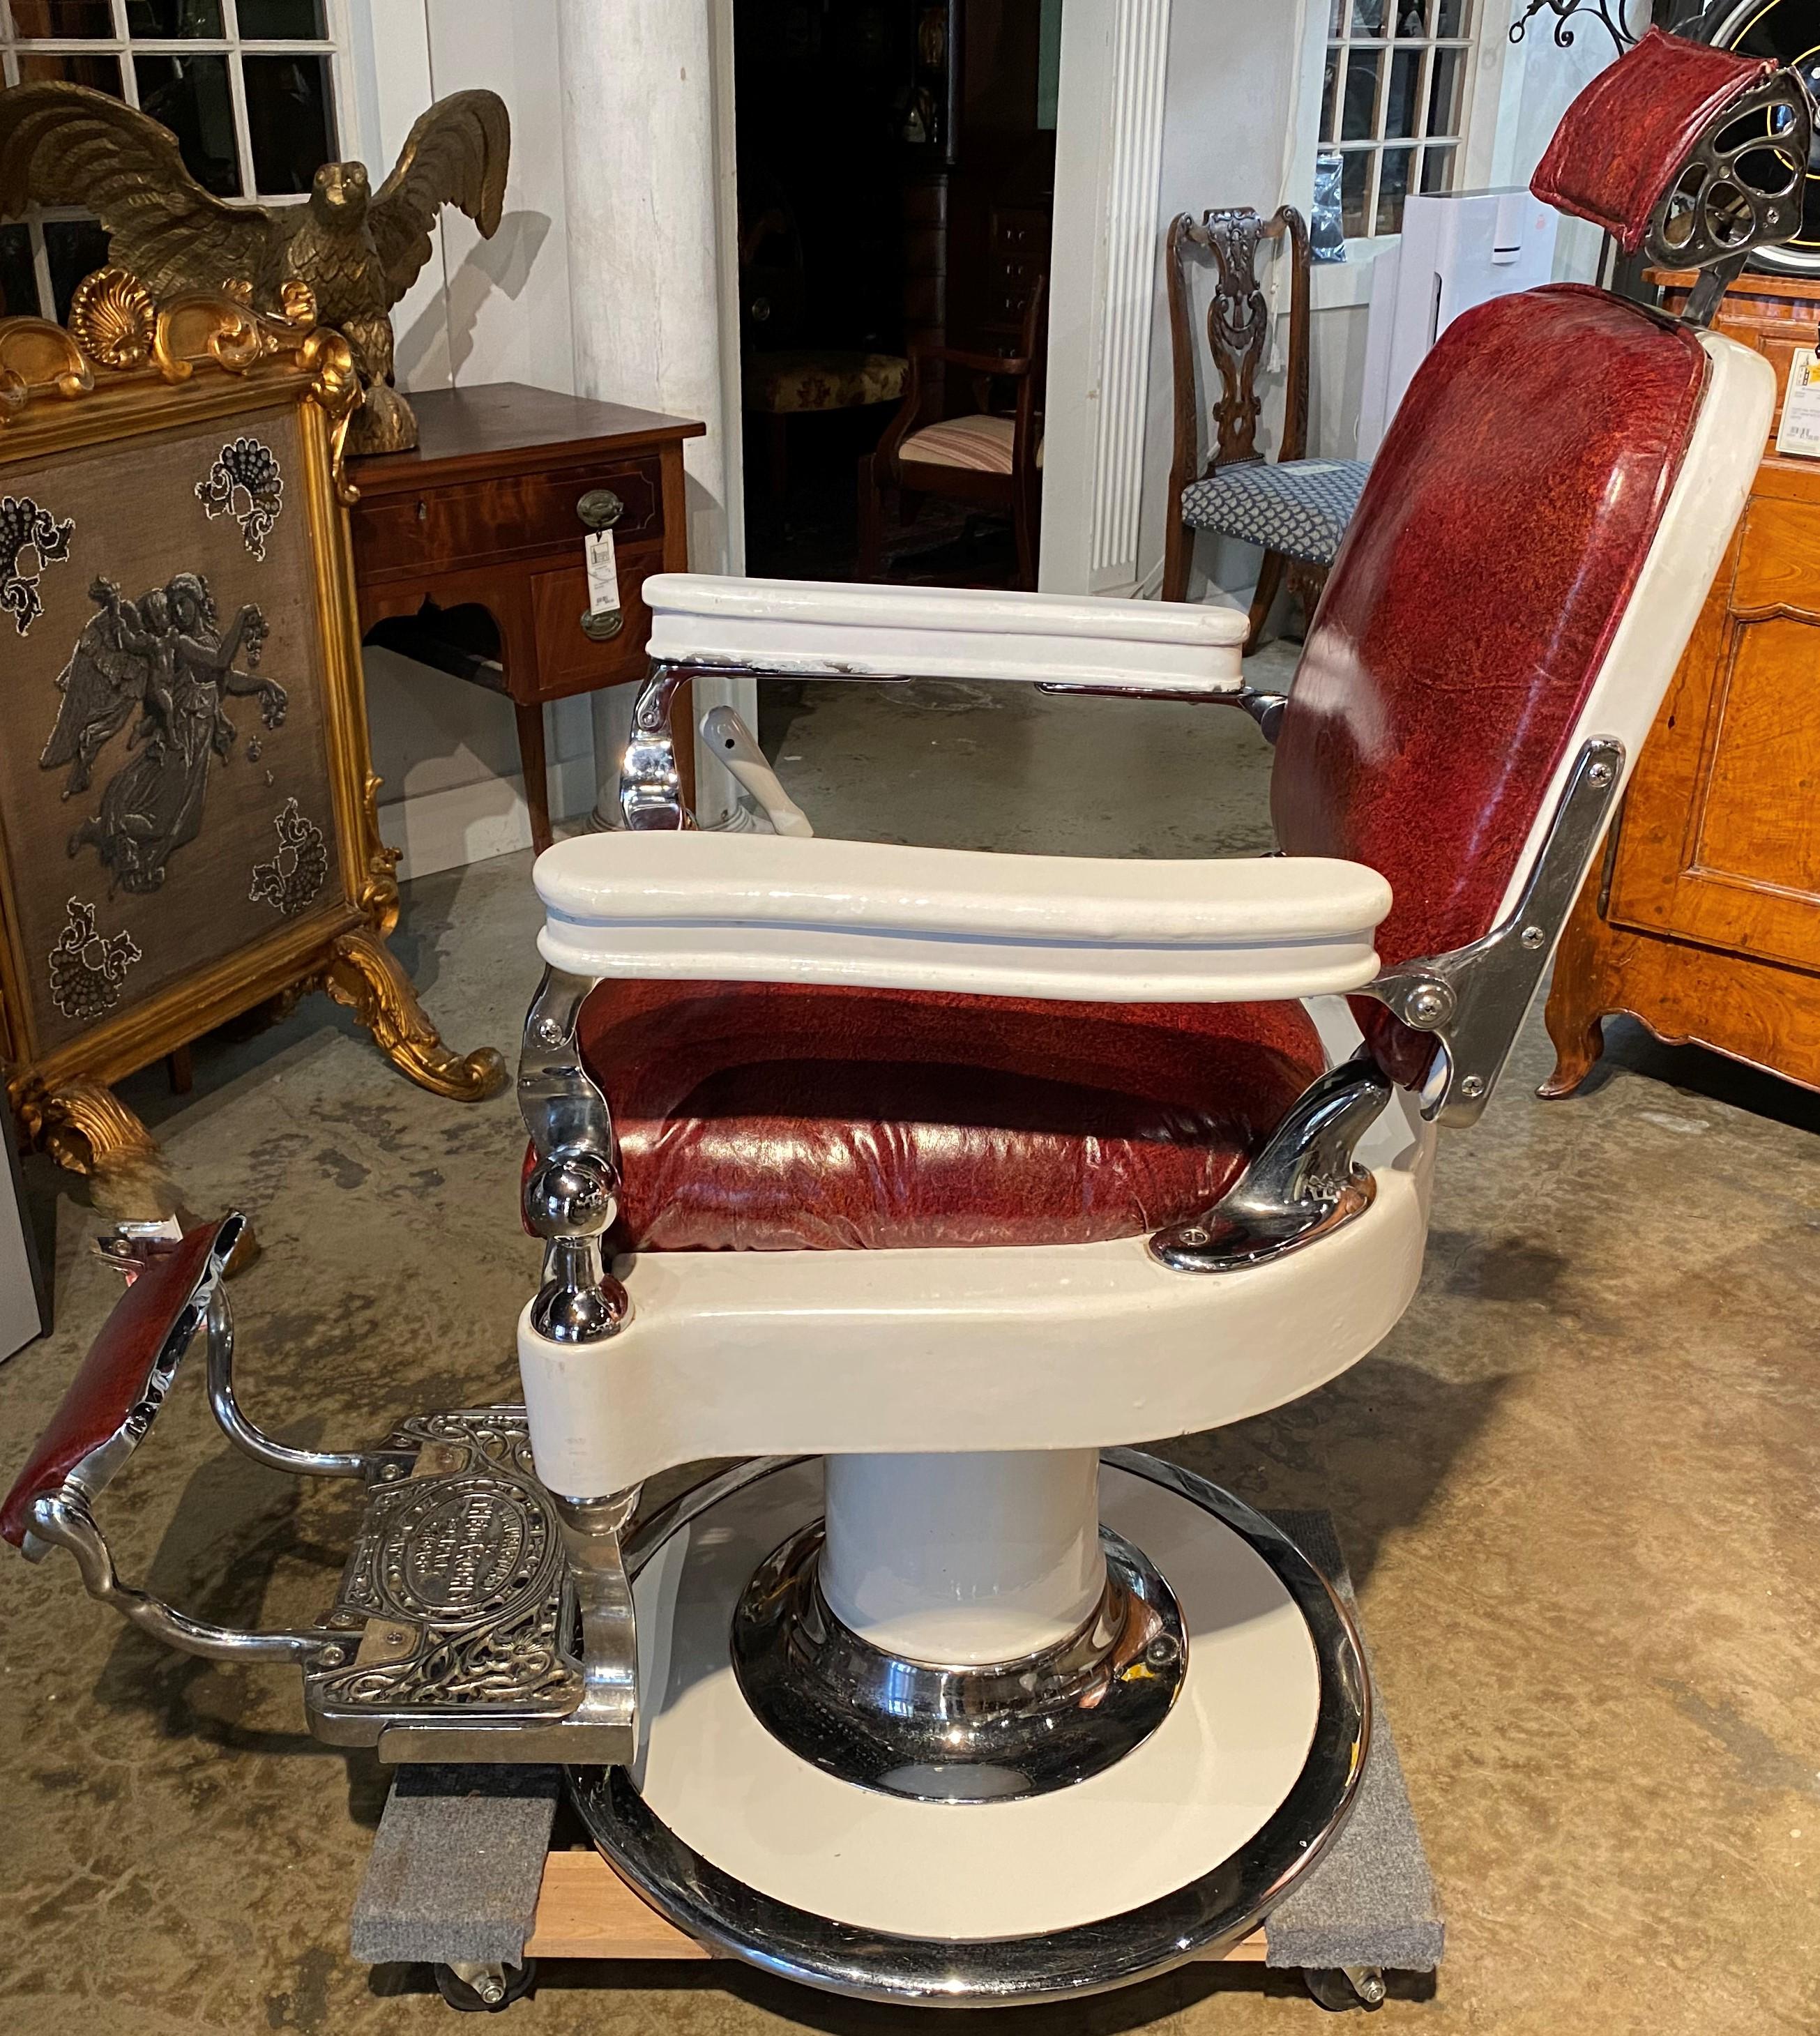 Cast Theodore a Kochs Restored Chrome, Porcelain Barber Chair, circa 1920